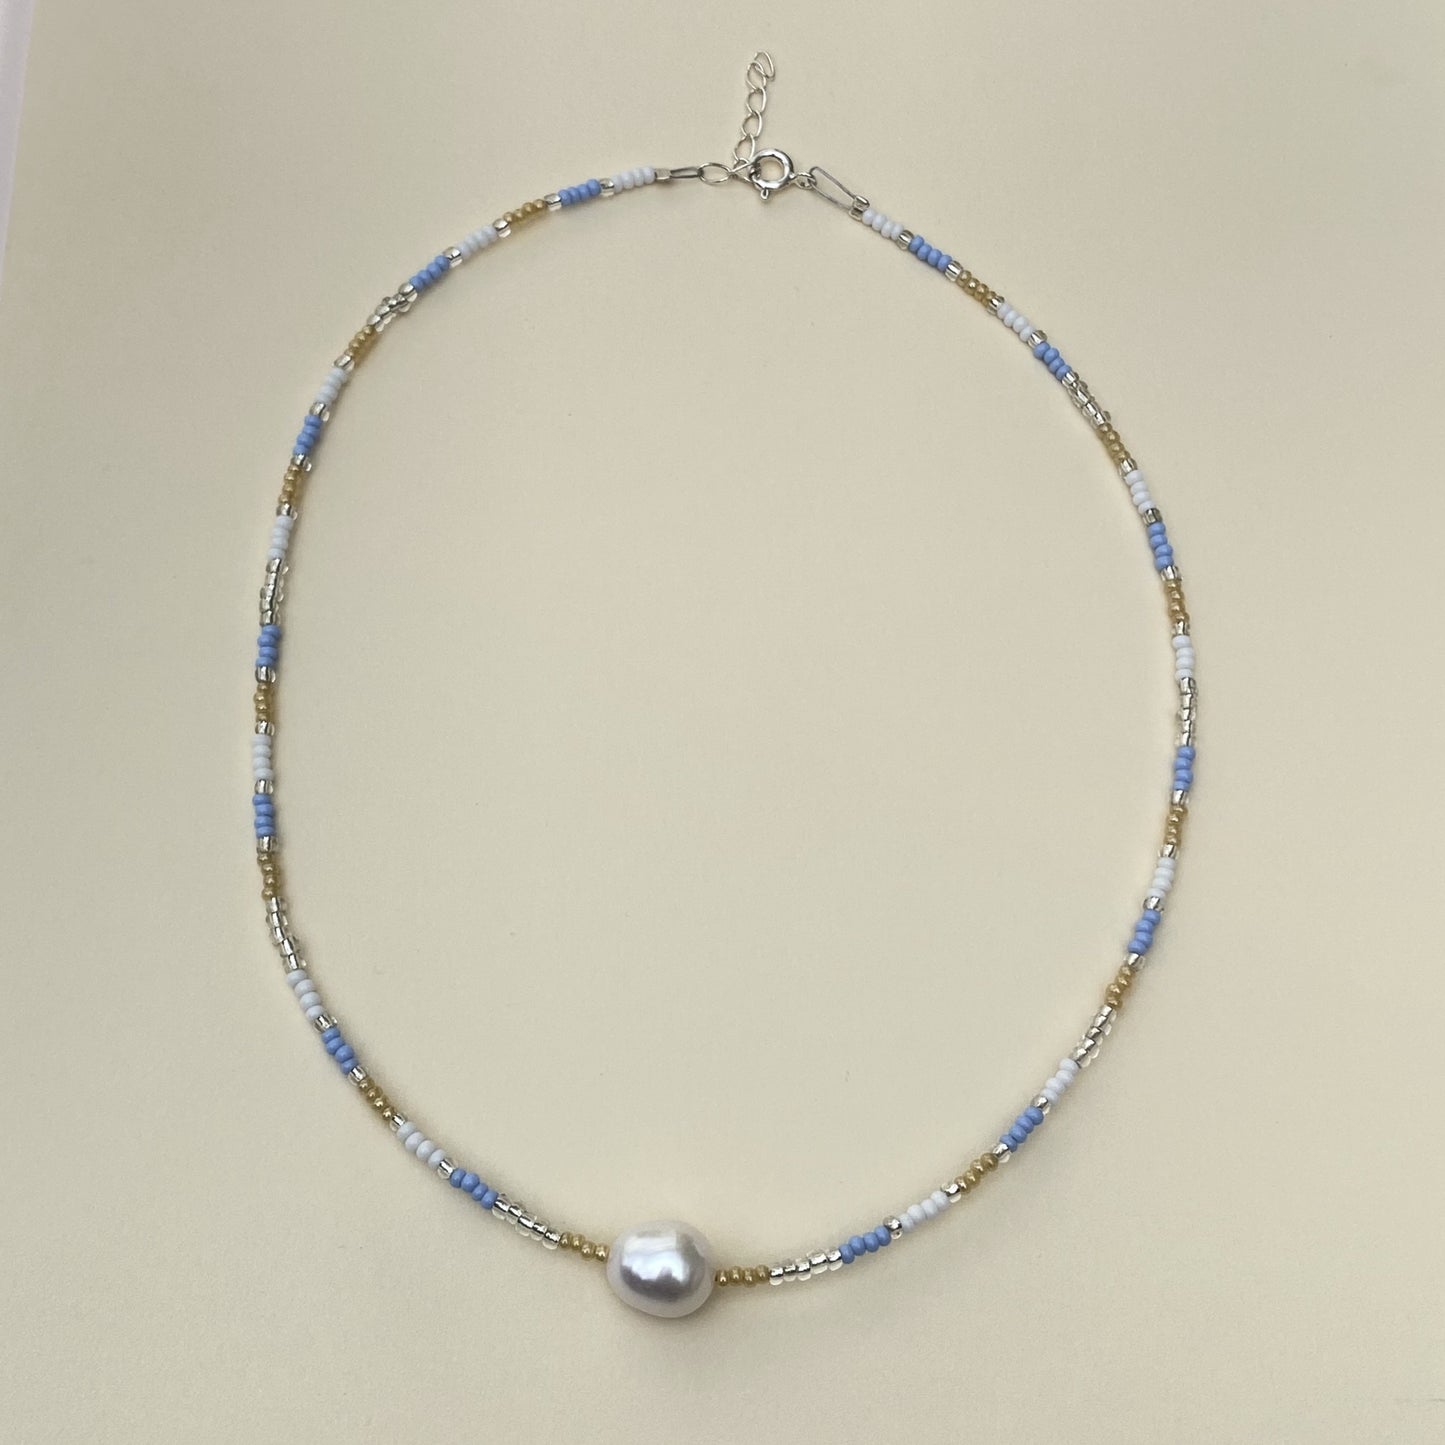 Isabel necklace